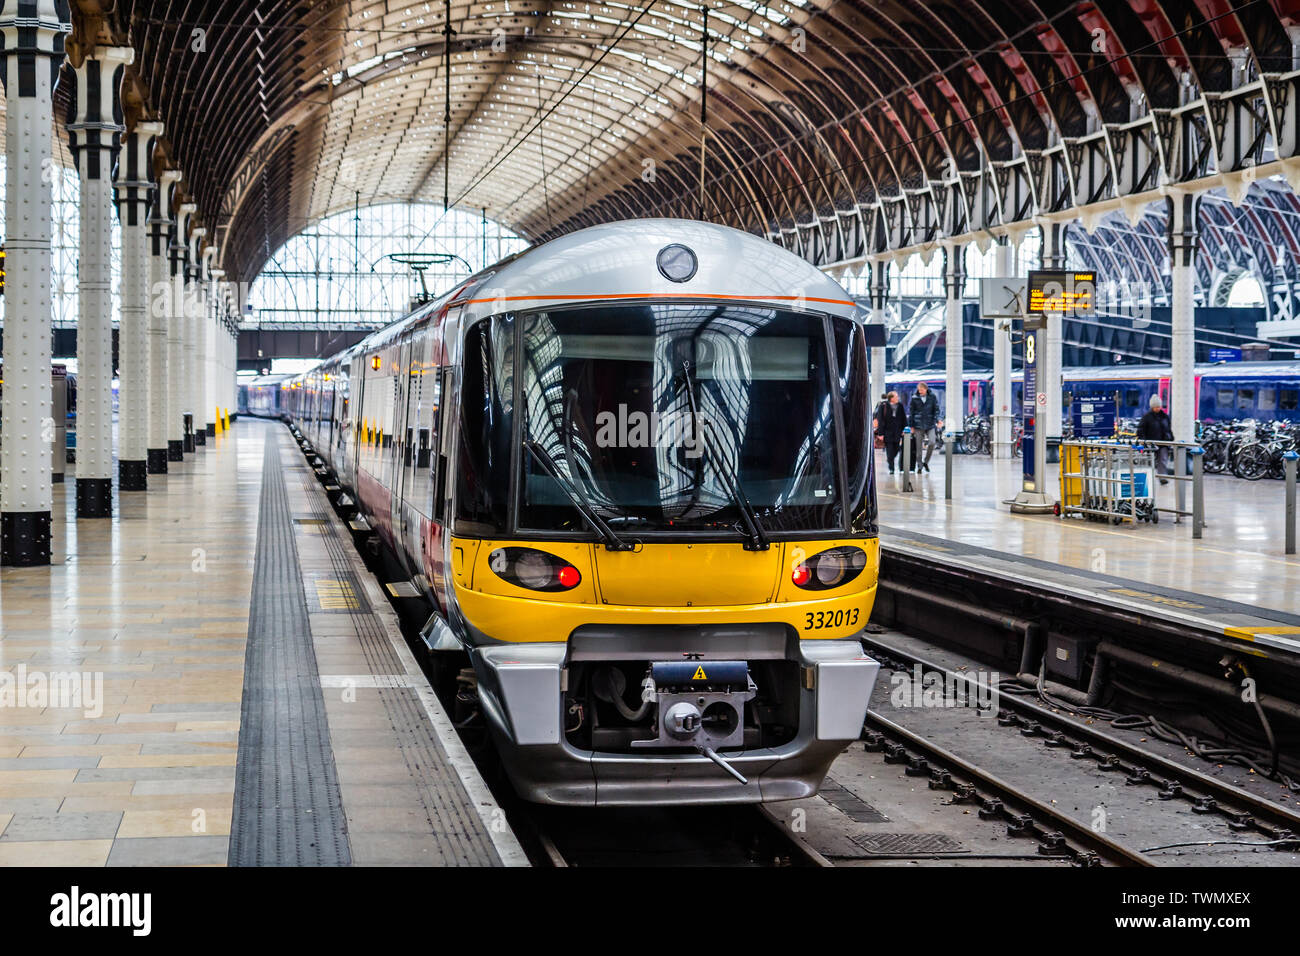 Train at platform in Paddington Railway Station, London, UK on 18 December 2012 Stock Photo